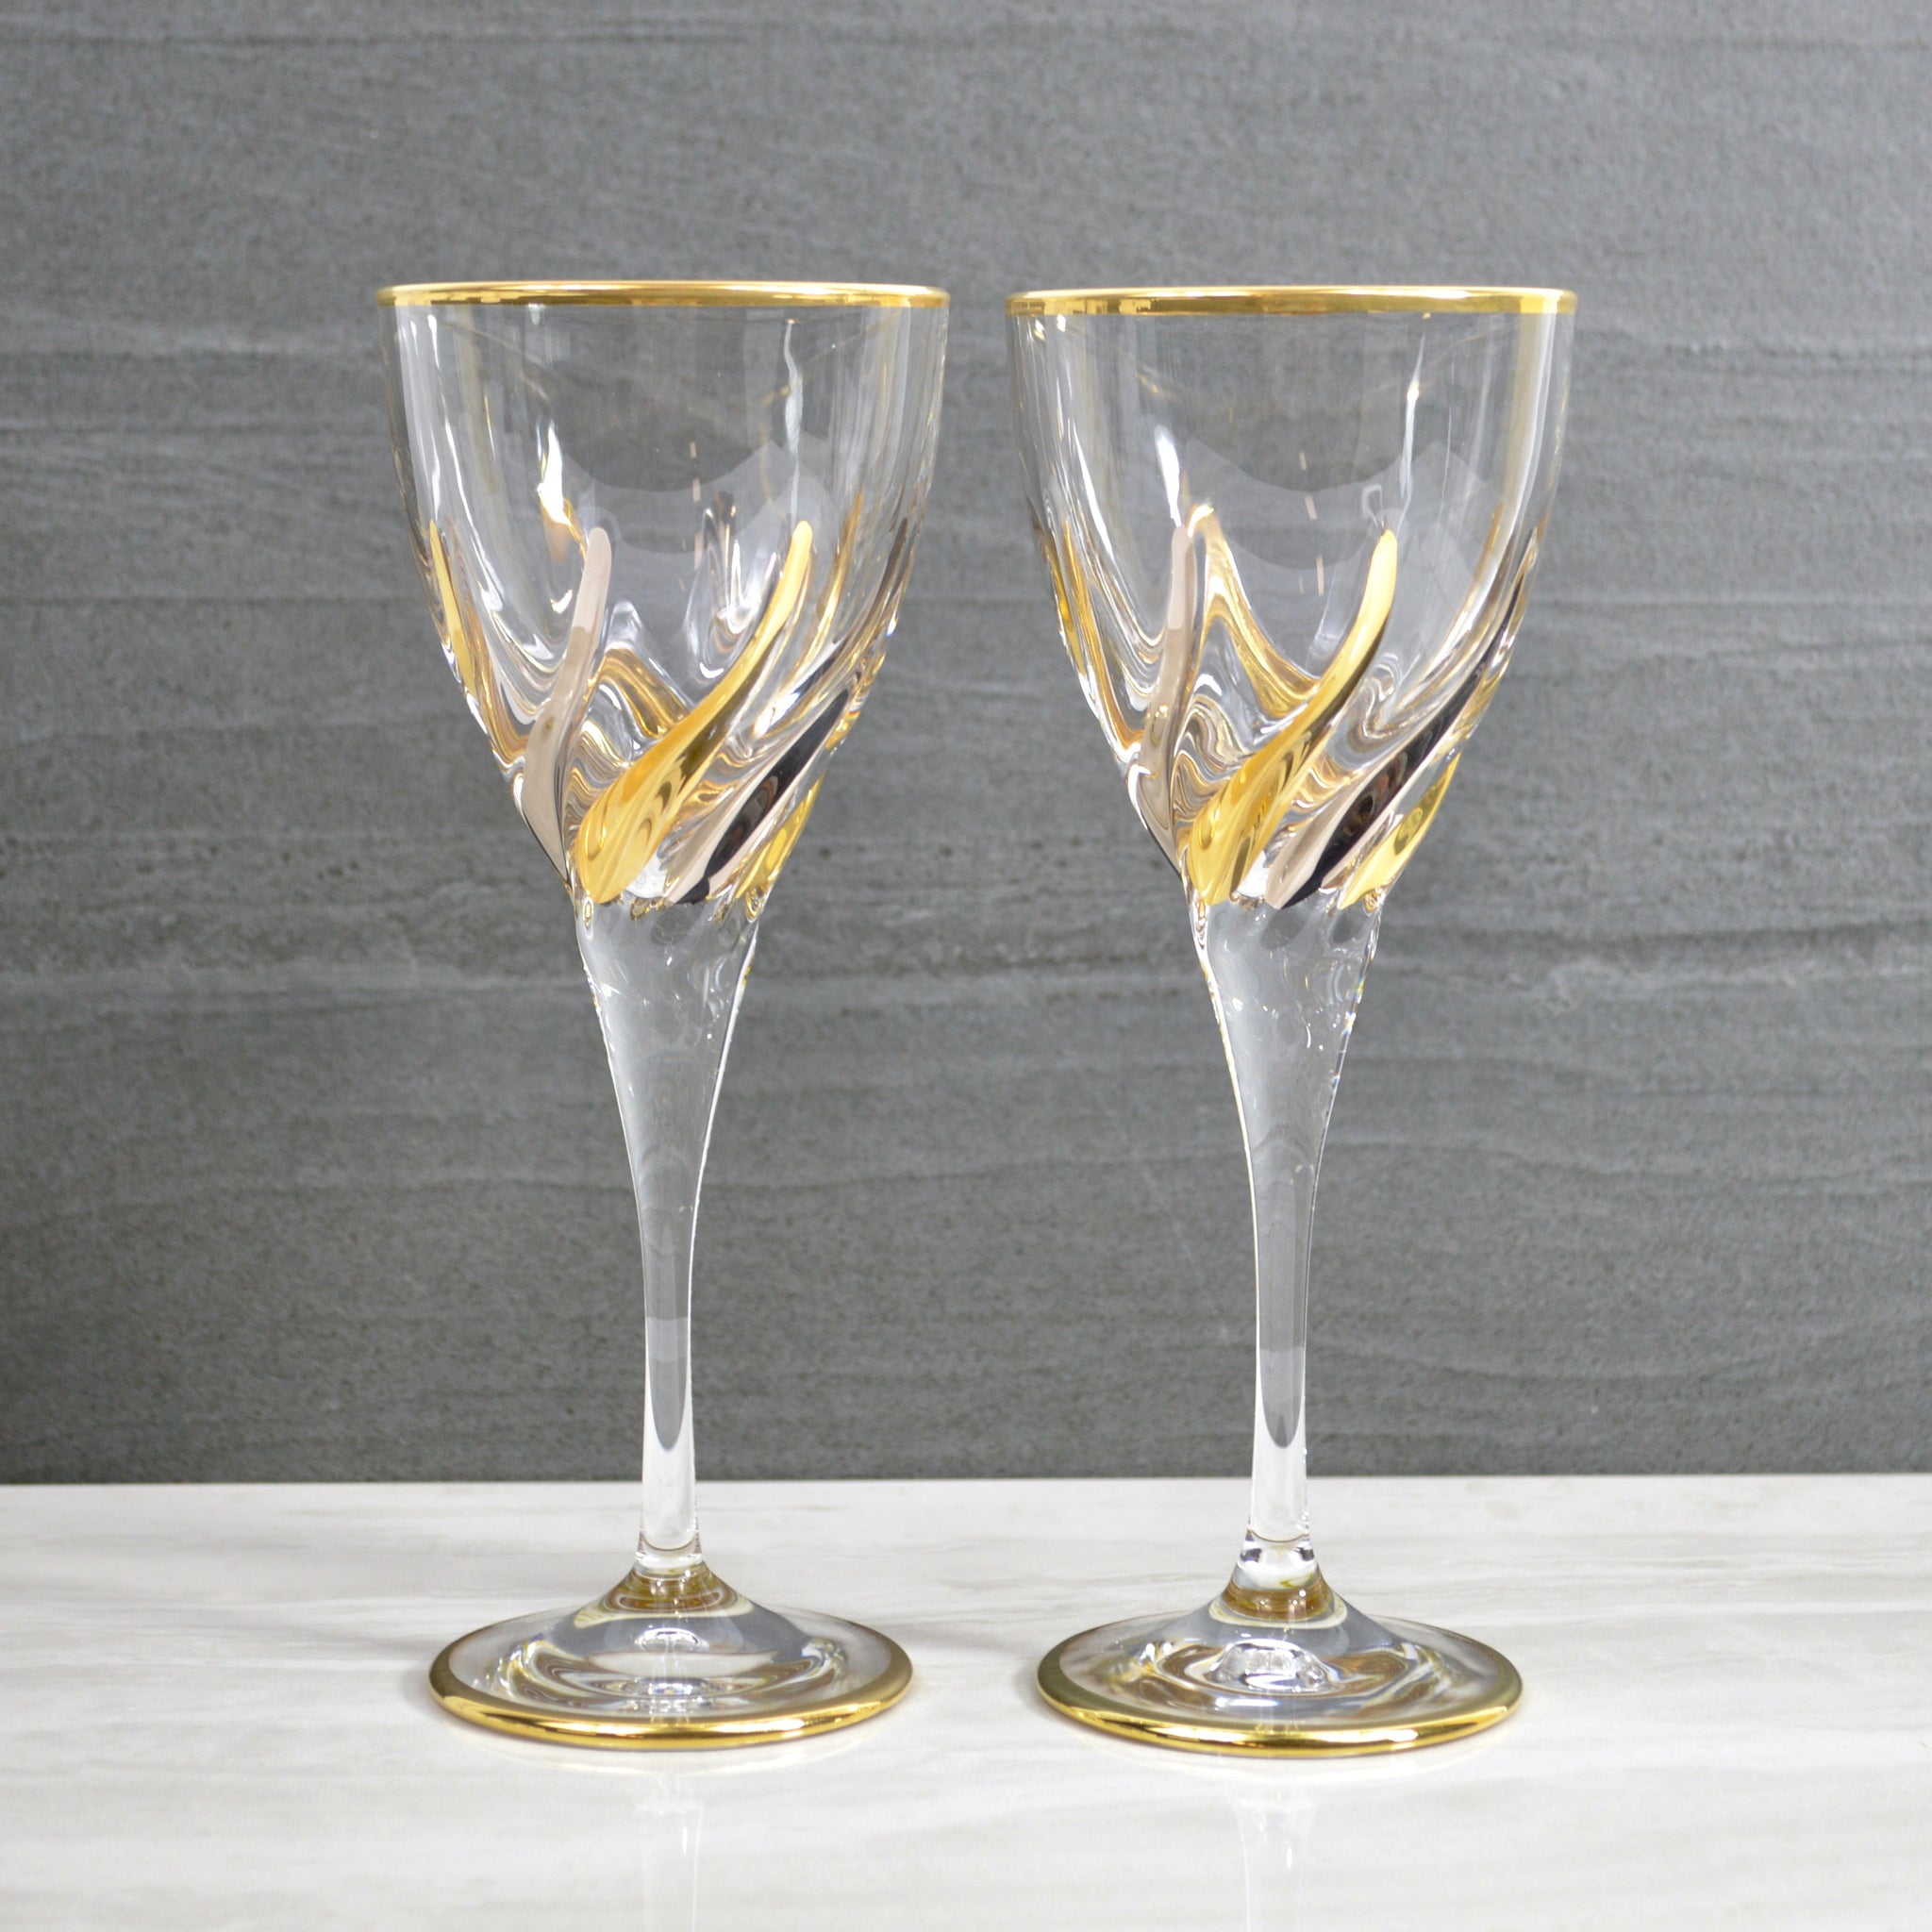 Trix Italian Crystal Platinum Champagne Glasses, Set of 2 - My Italian Decor